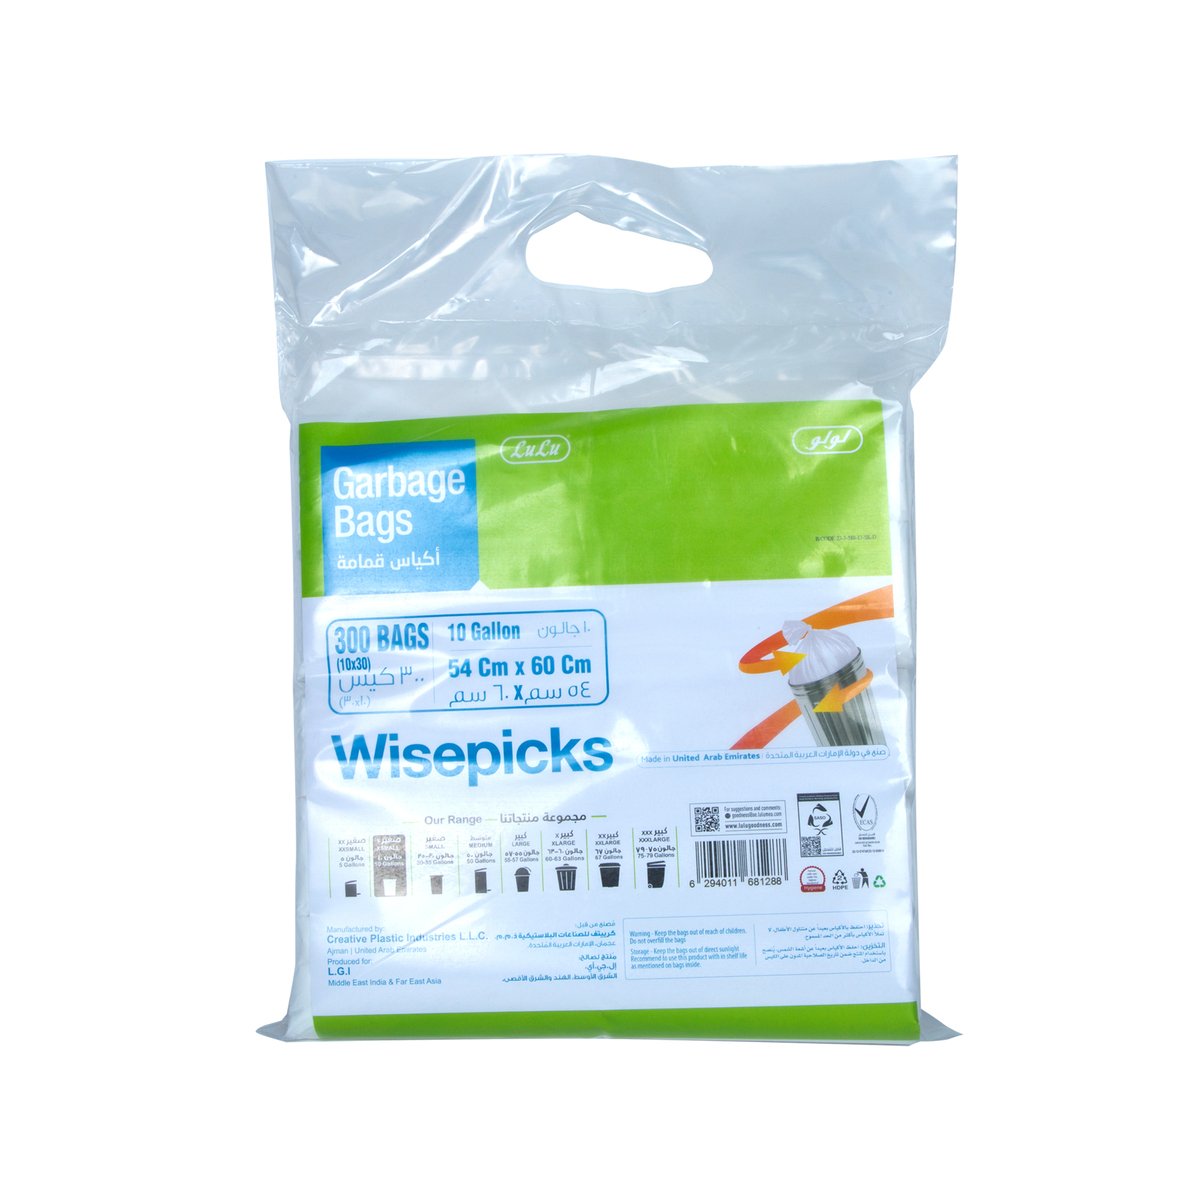 LuLu Wisepicks Garbage Bags Roll White 10 Gallon 54cm x 60cm 10 x 30 pcs